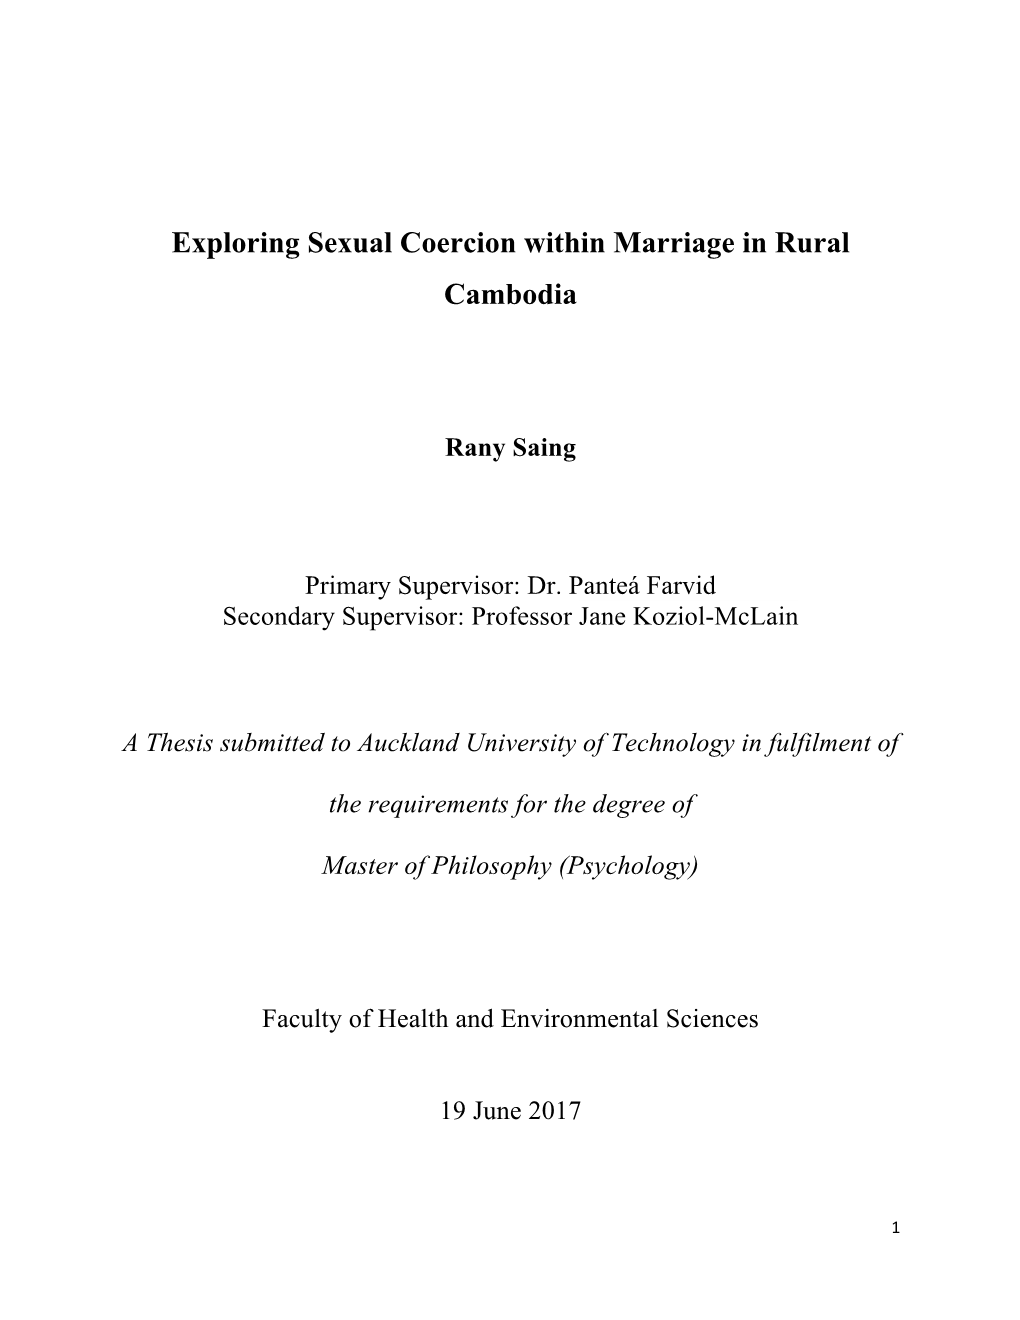 Exploring Sexual Coercion Within Marriage in Rural Cambodia